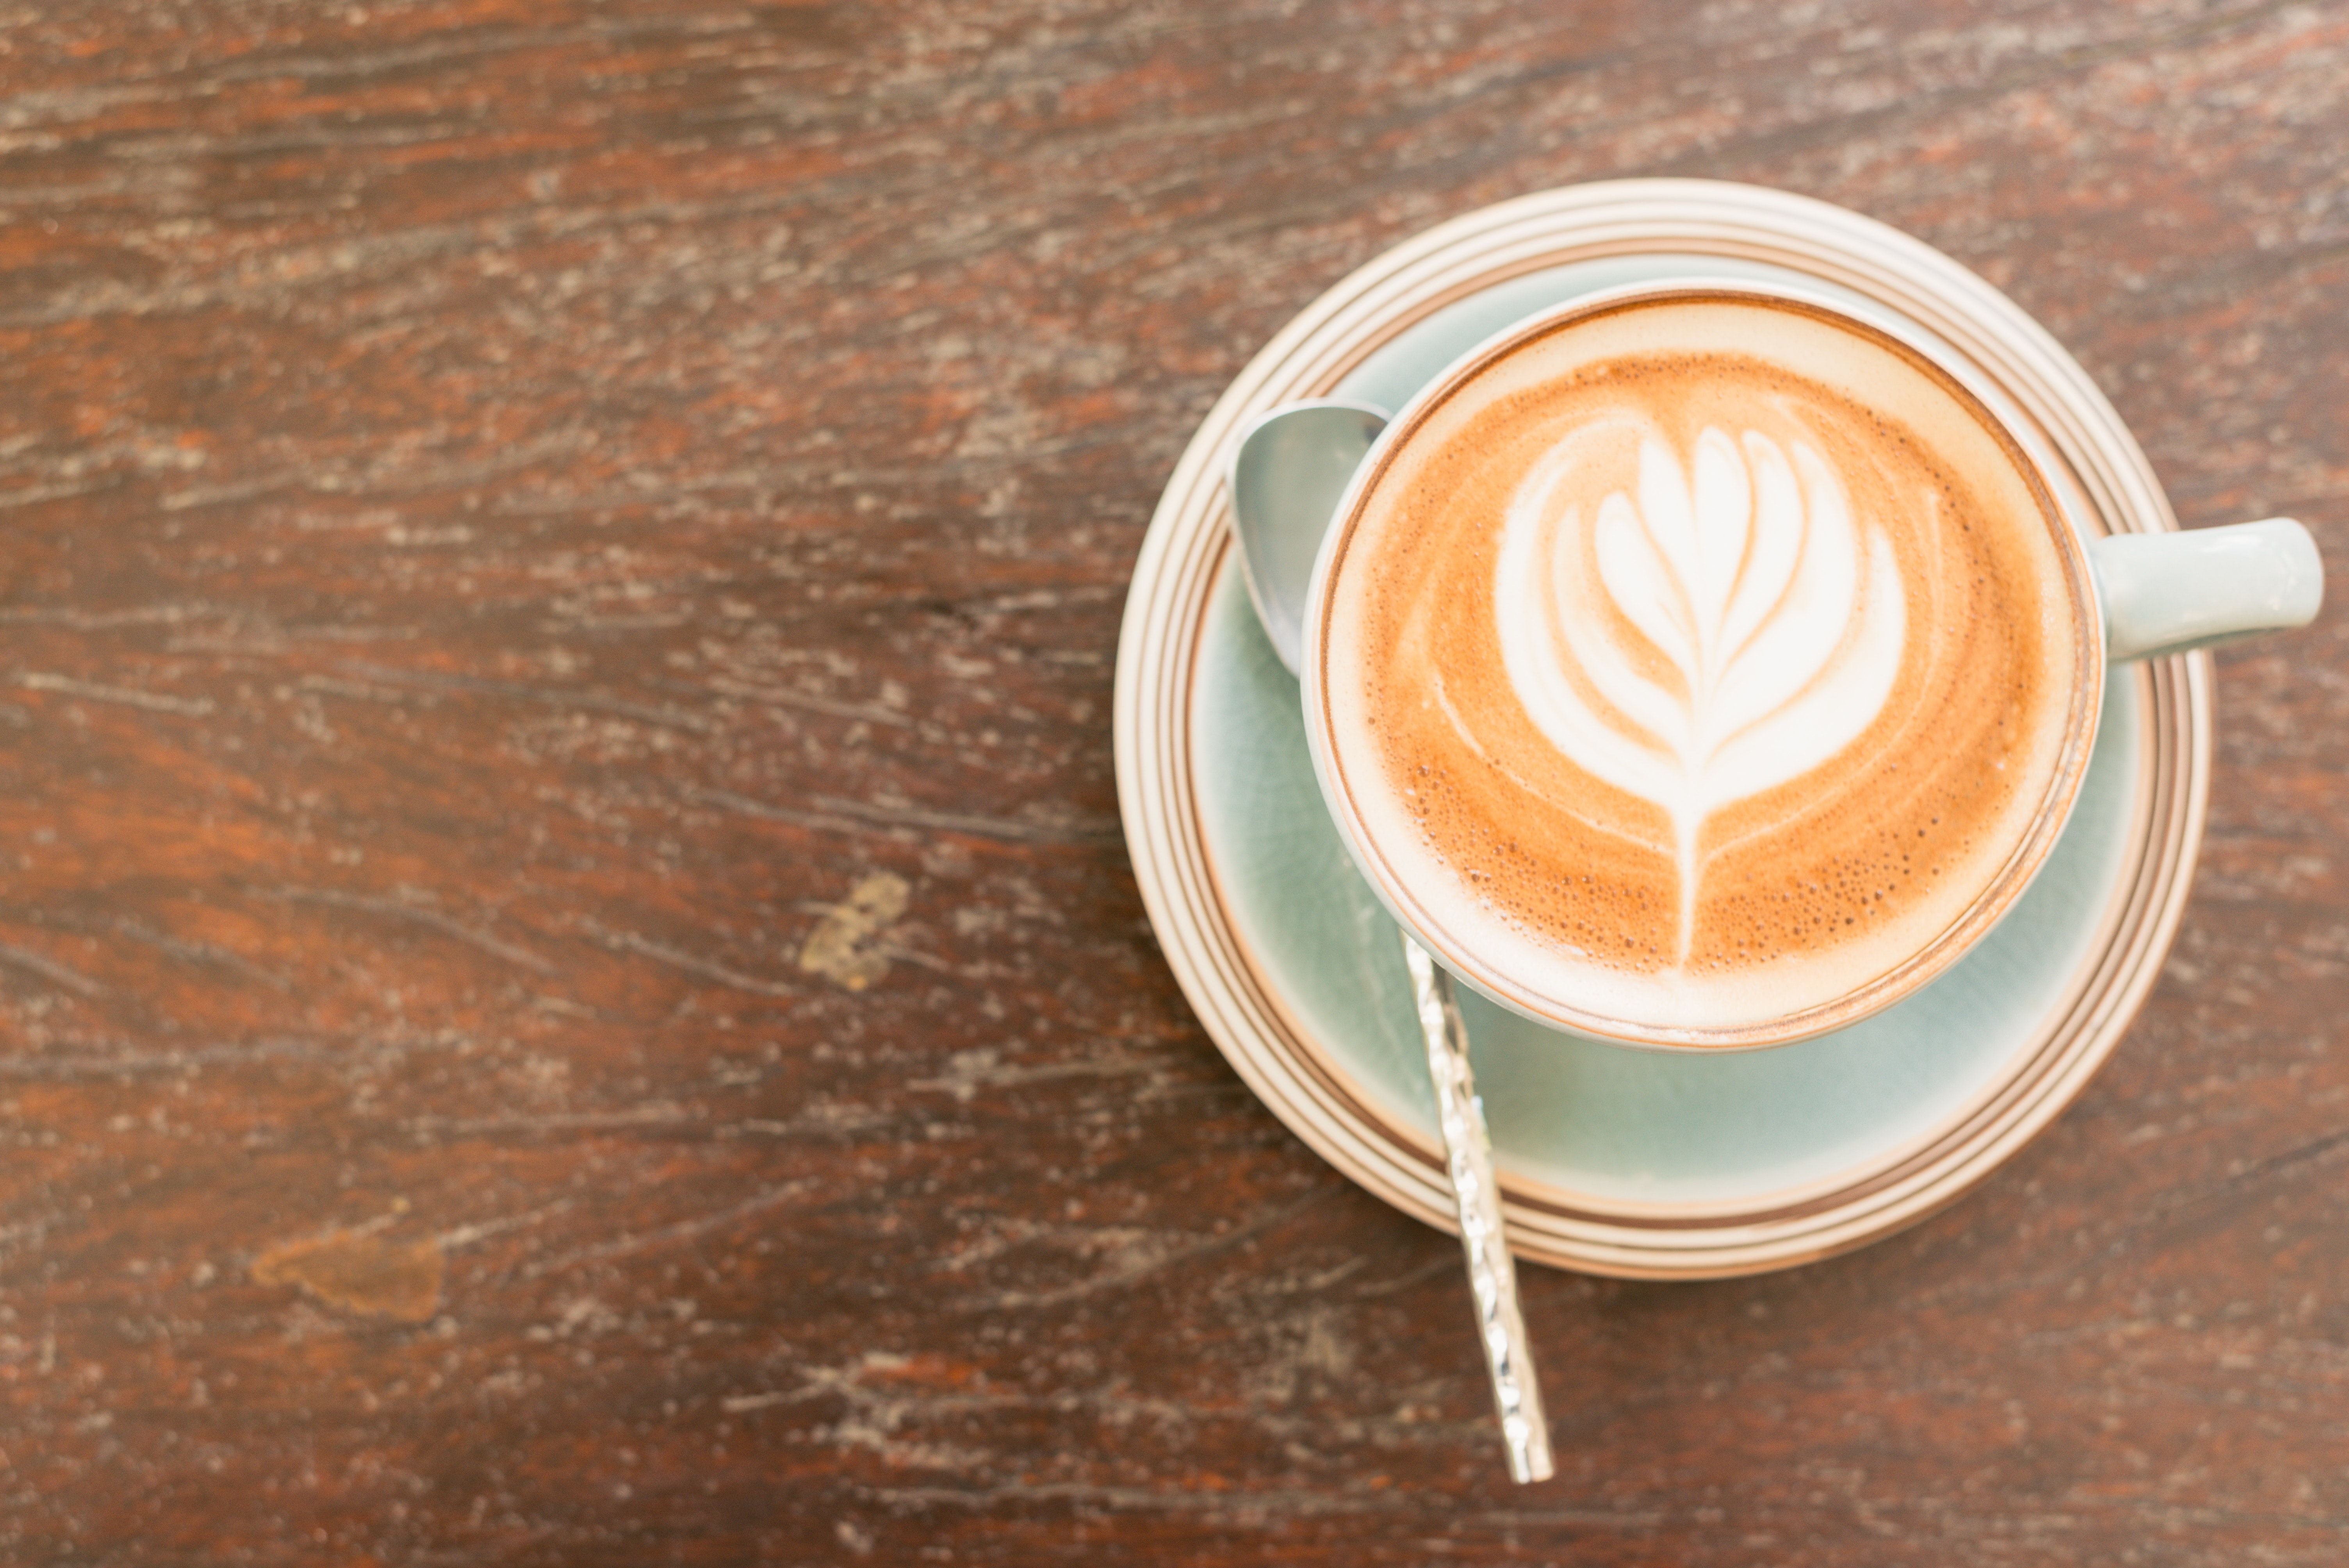 Caffe latte art